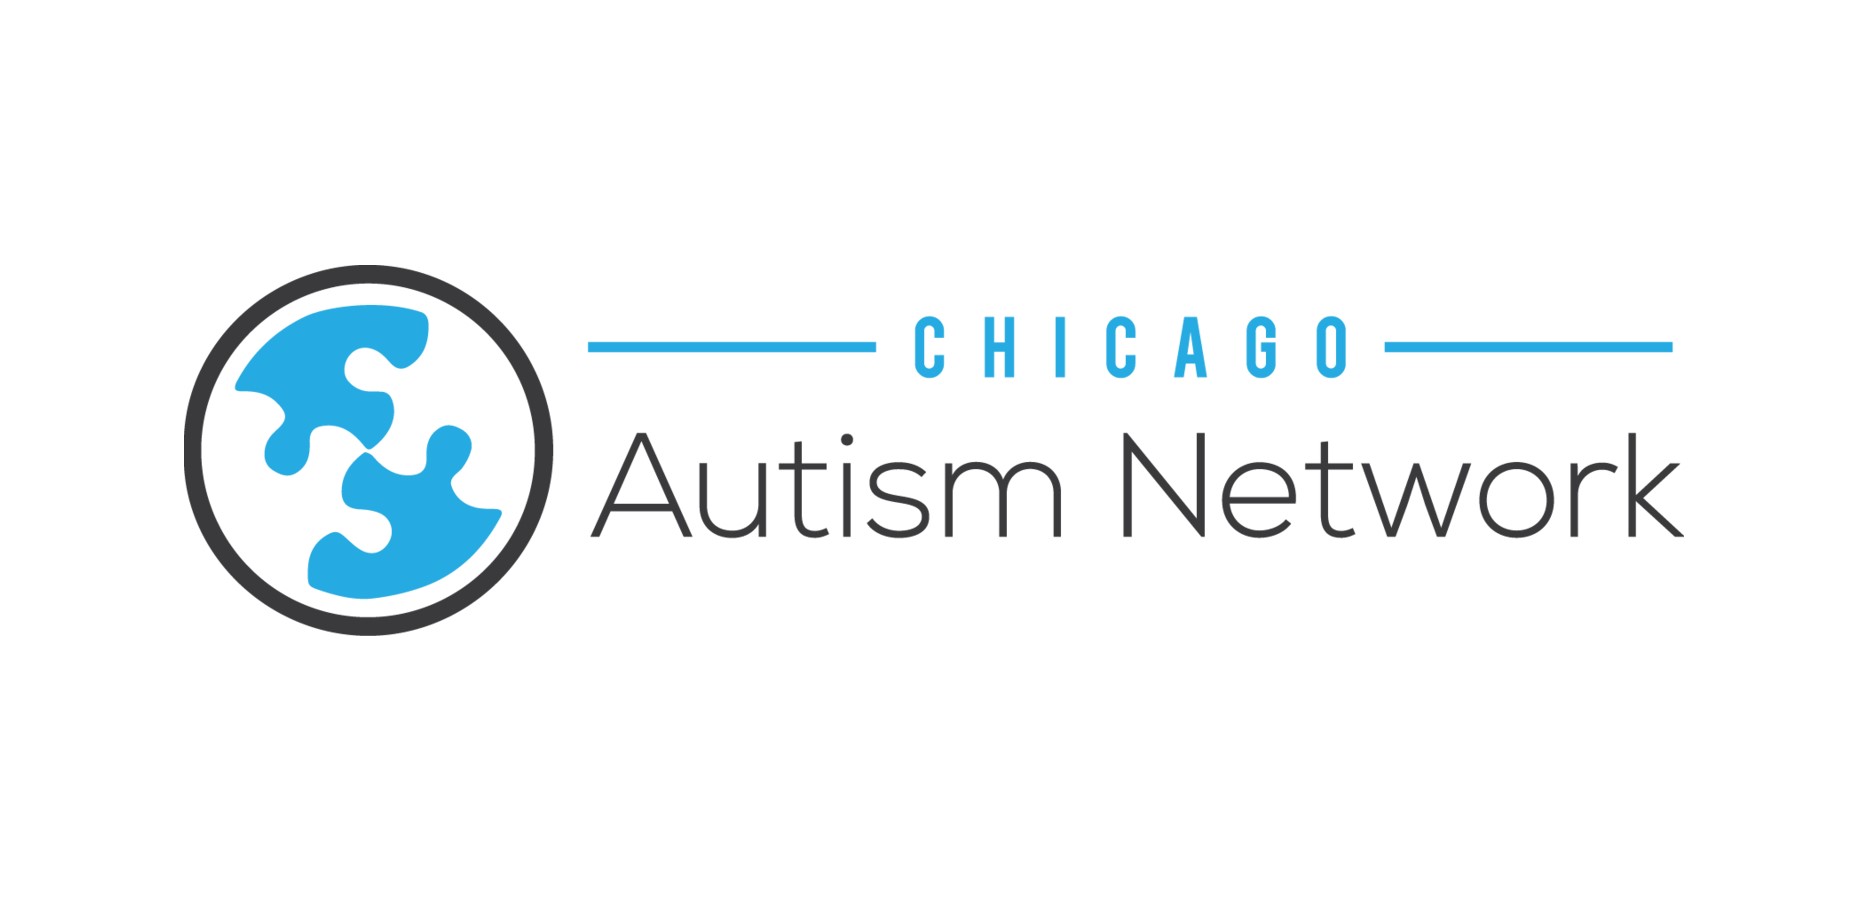 Chicago Autism Network